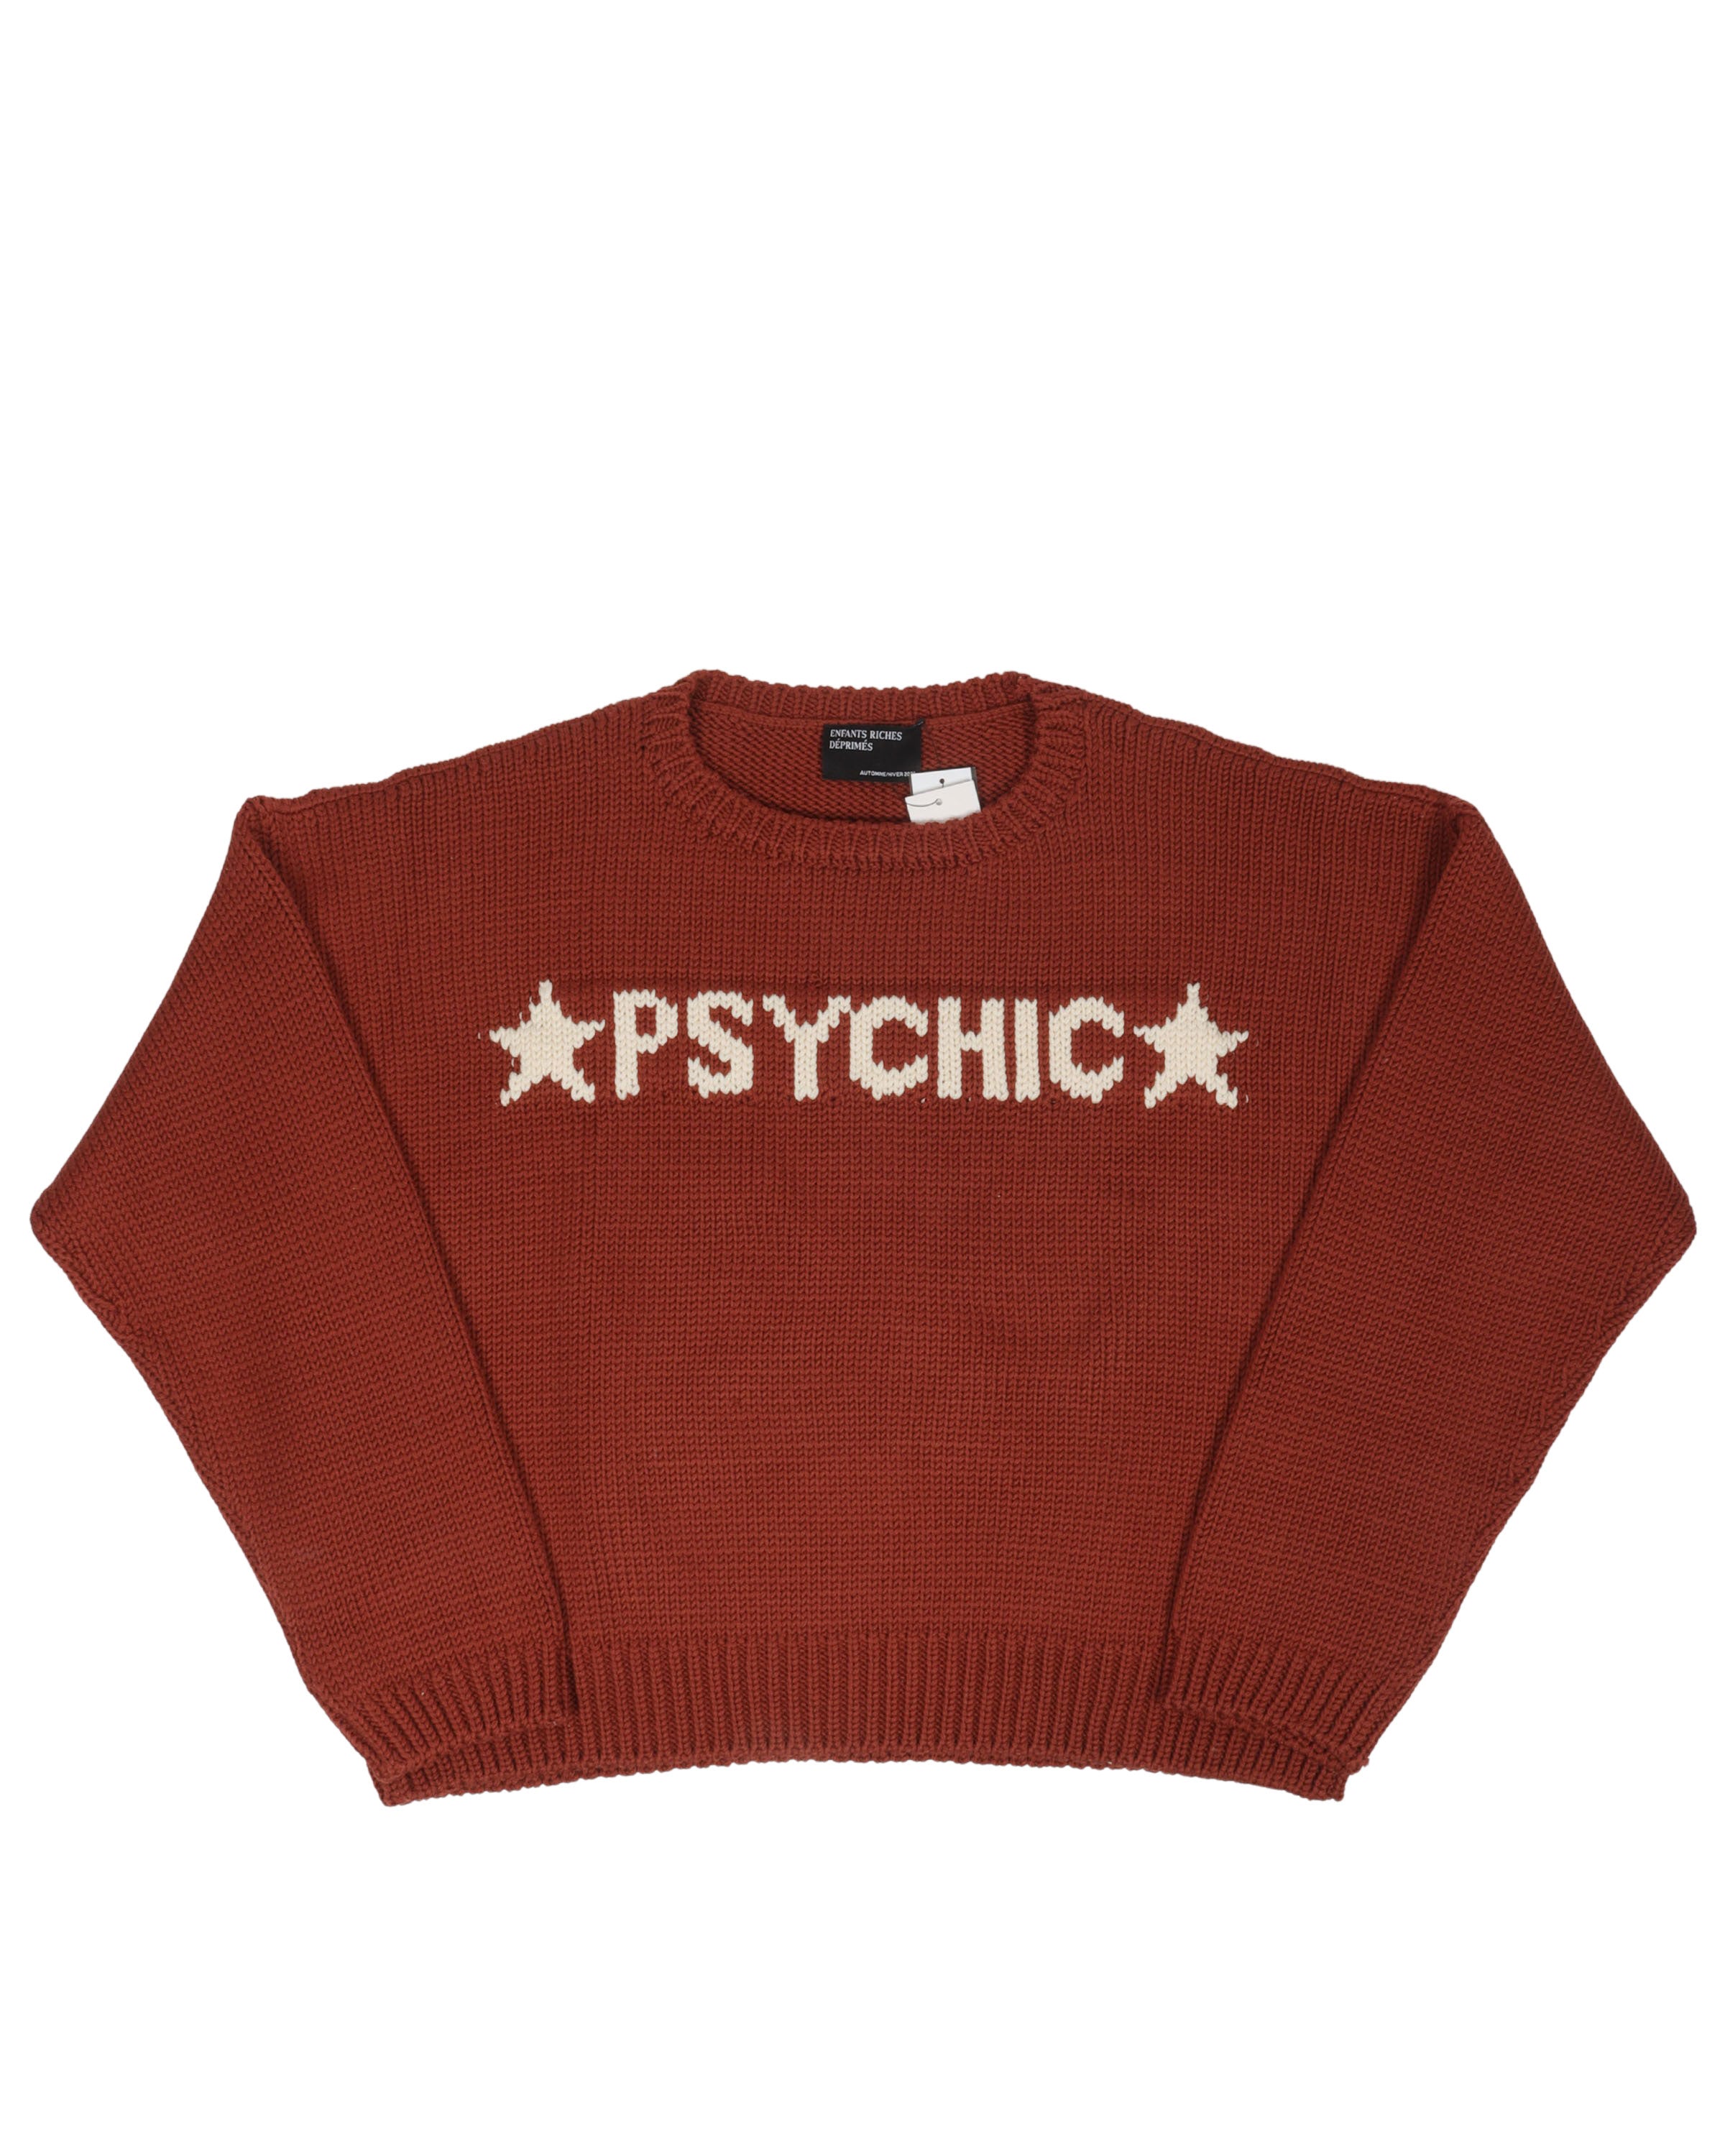 FW21 Psychic Wool Sweater